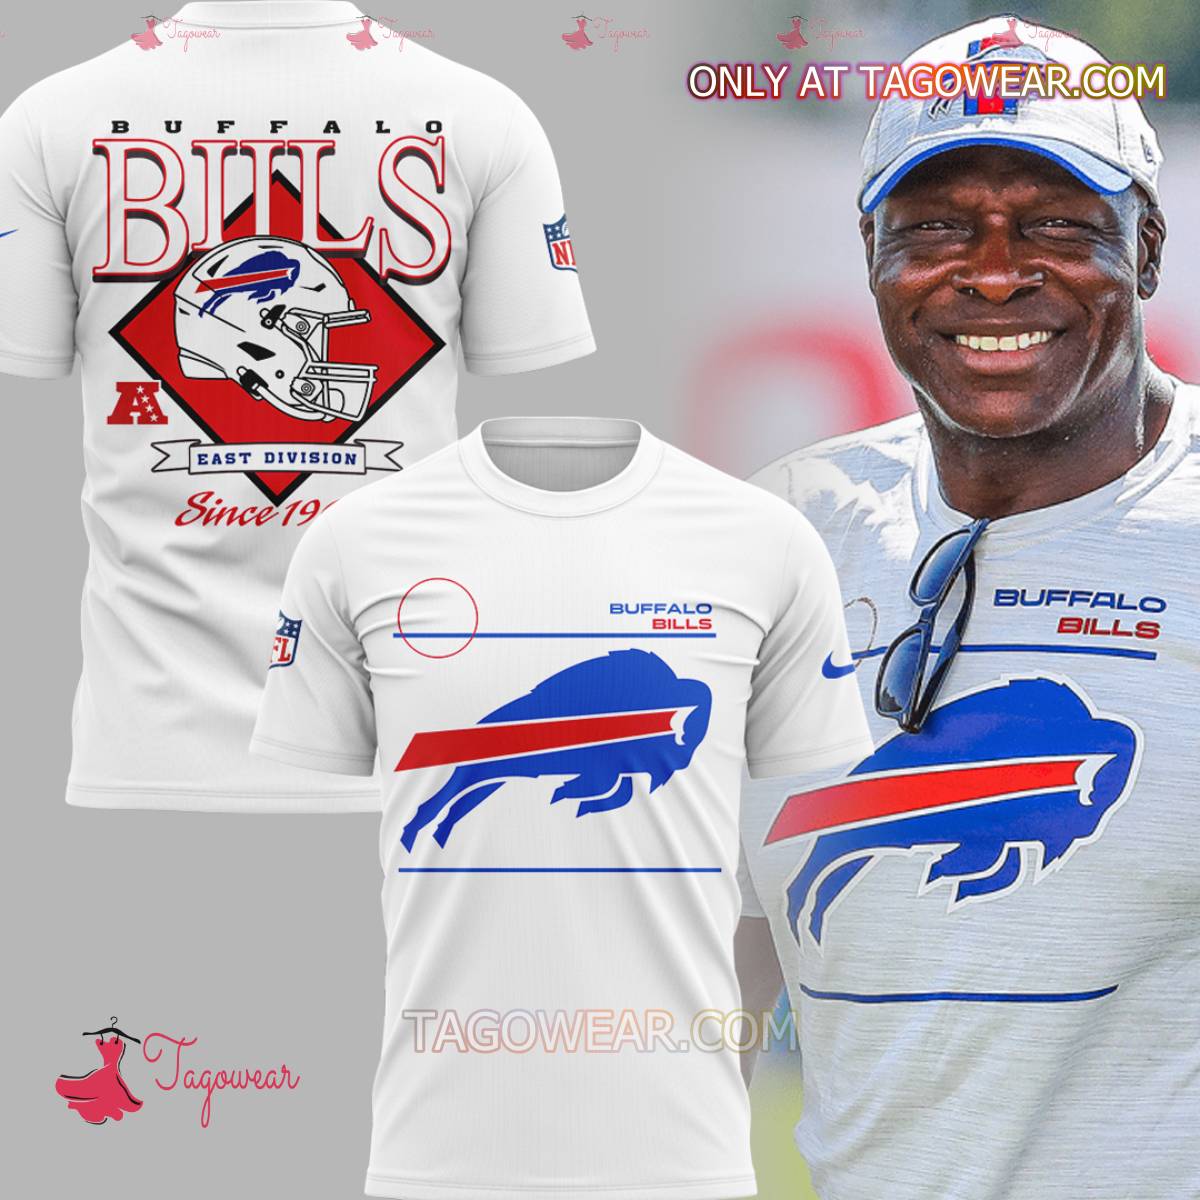 Buffalo Bills Bruce Smith East Division Since 1960 Shirt